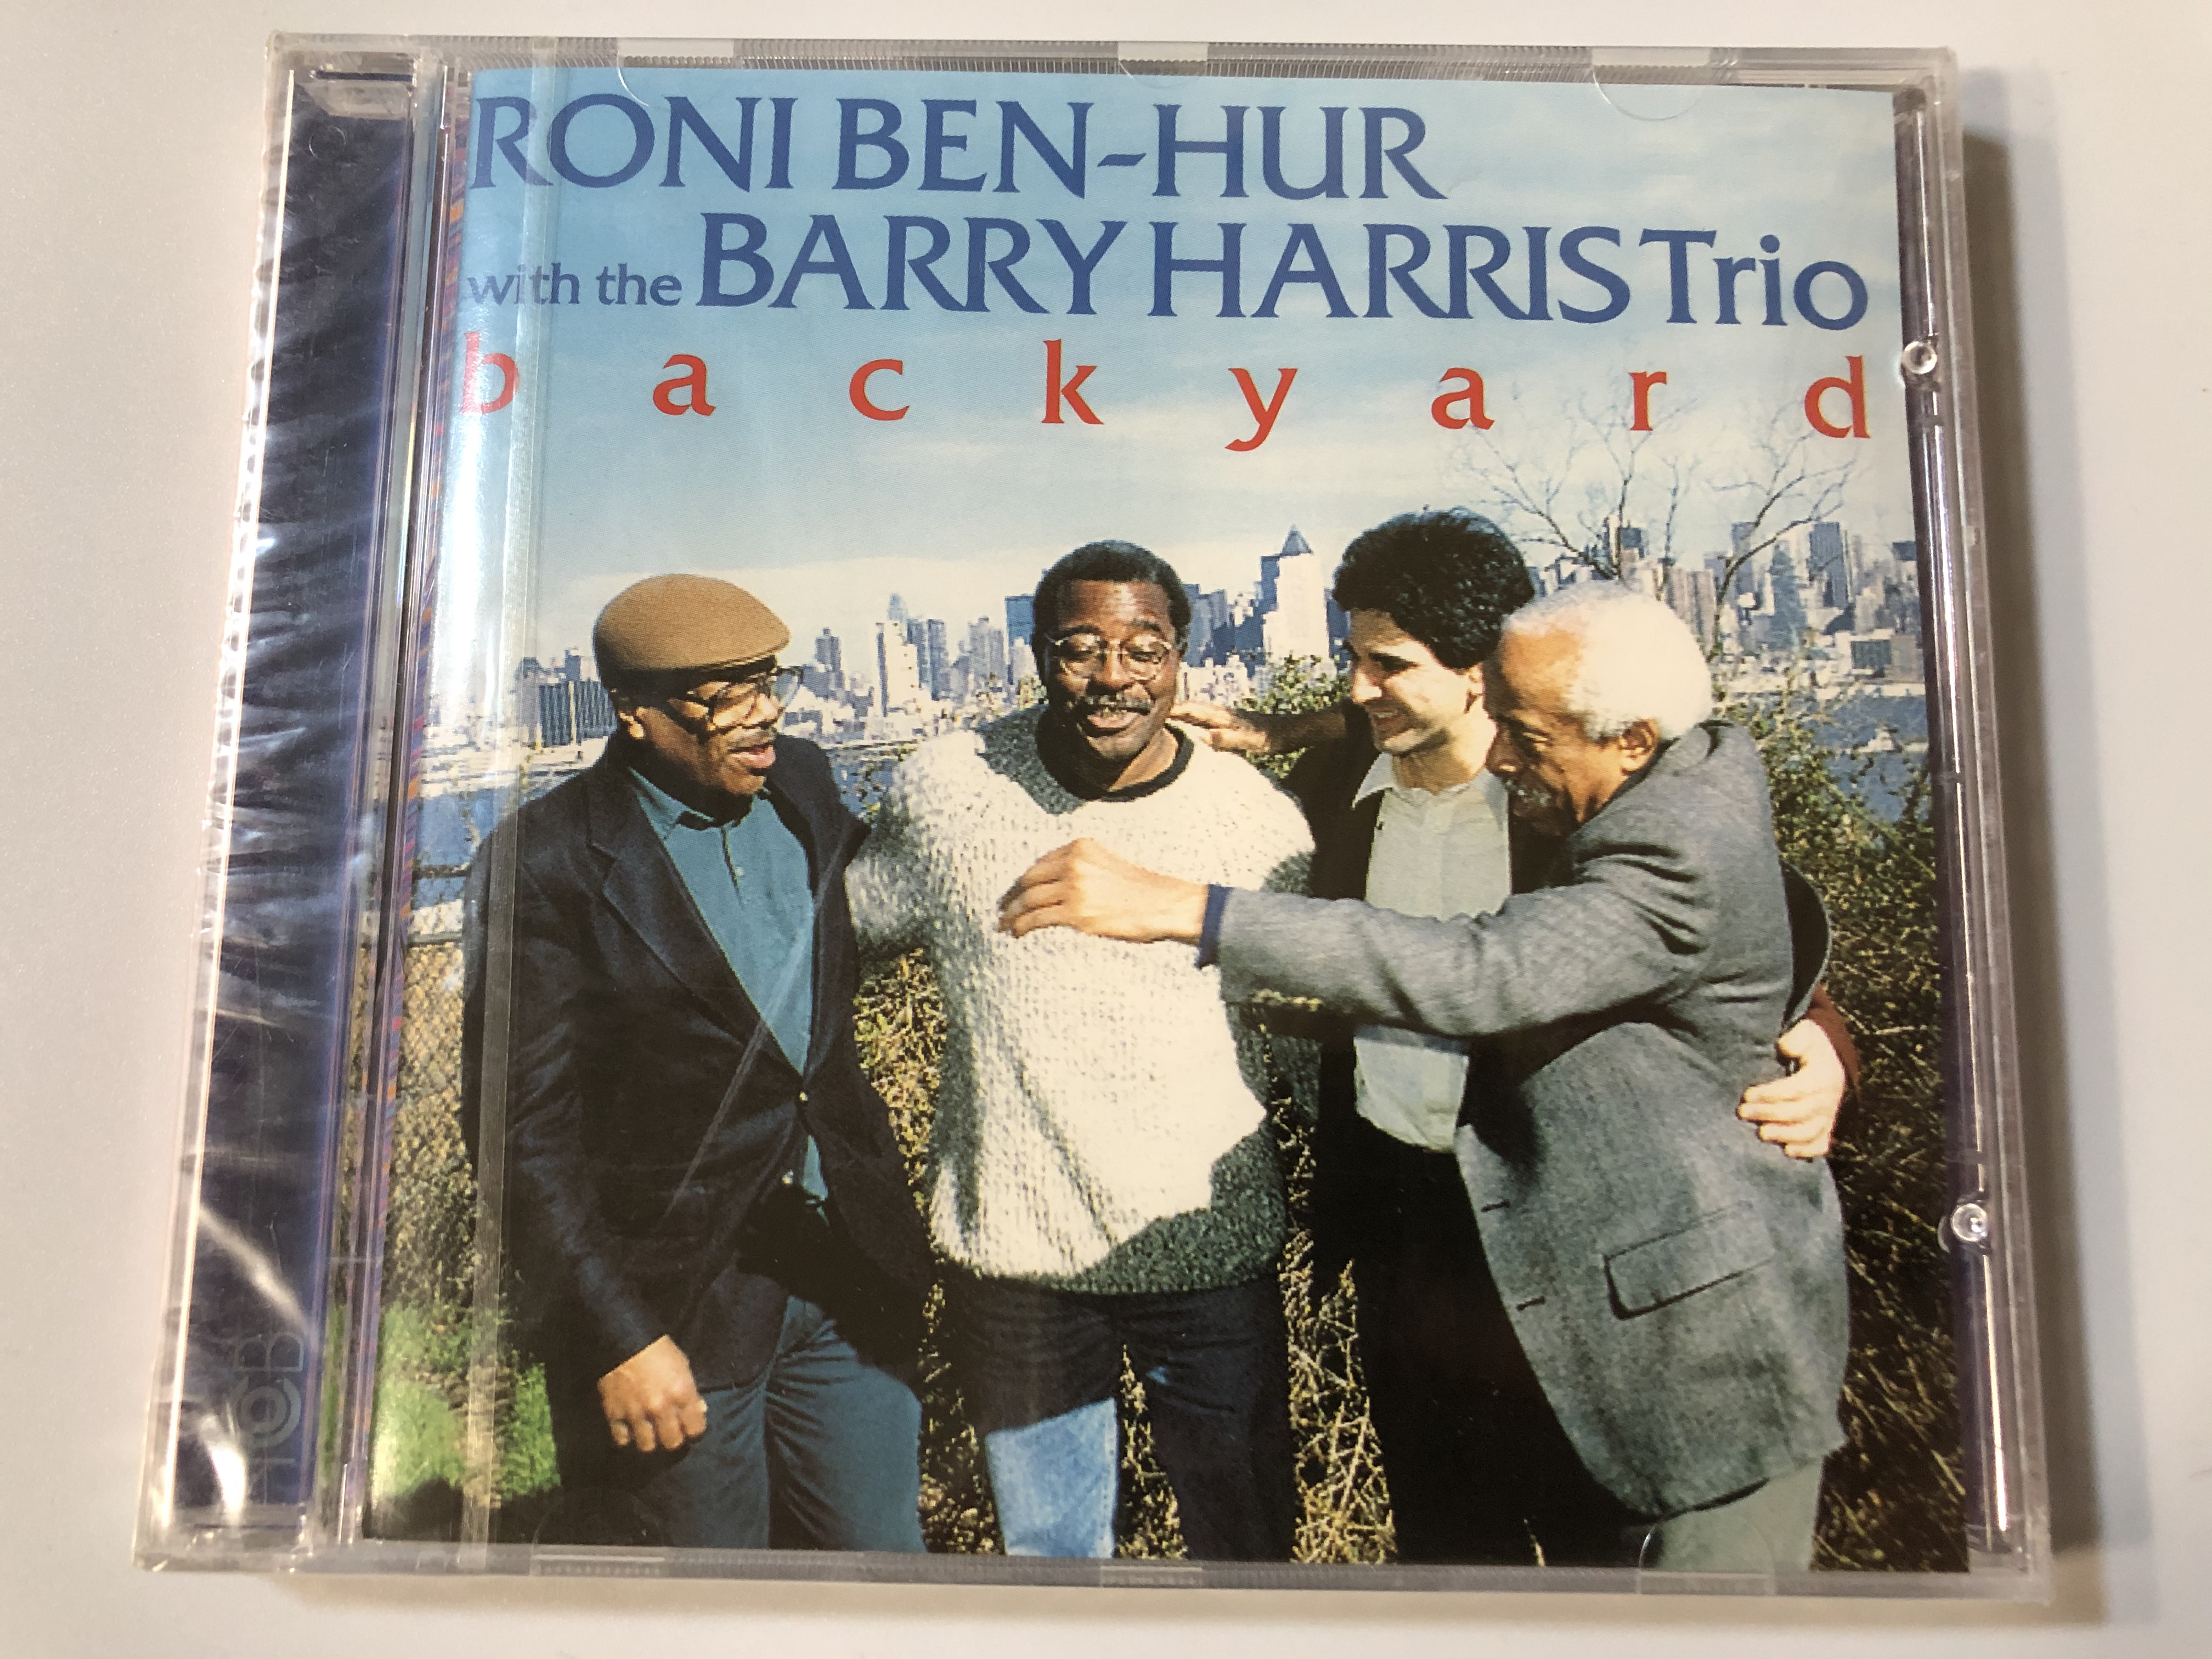 roni-ben-hur-with-the-barry-harris-trio-backyard-tcb-records-audio-cd-1995-95902-1-.jpg